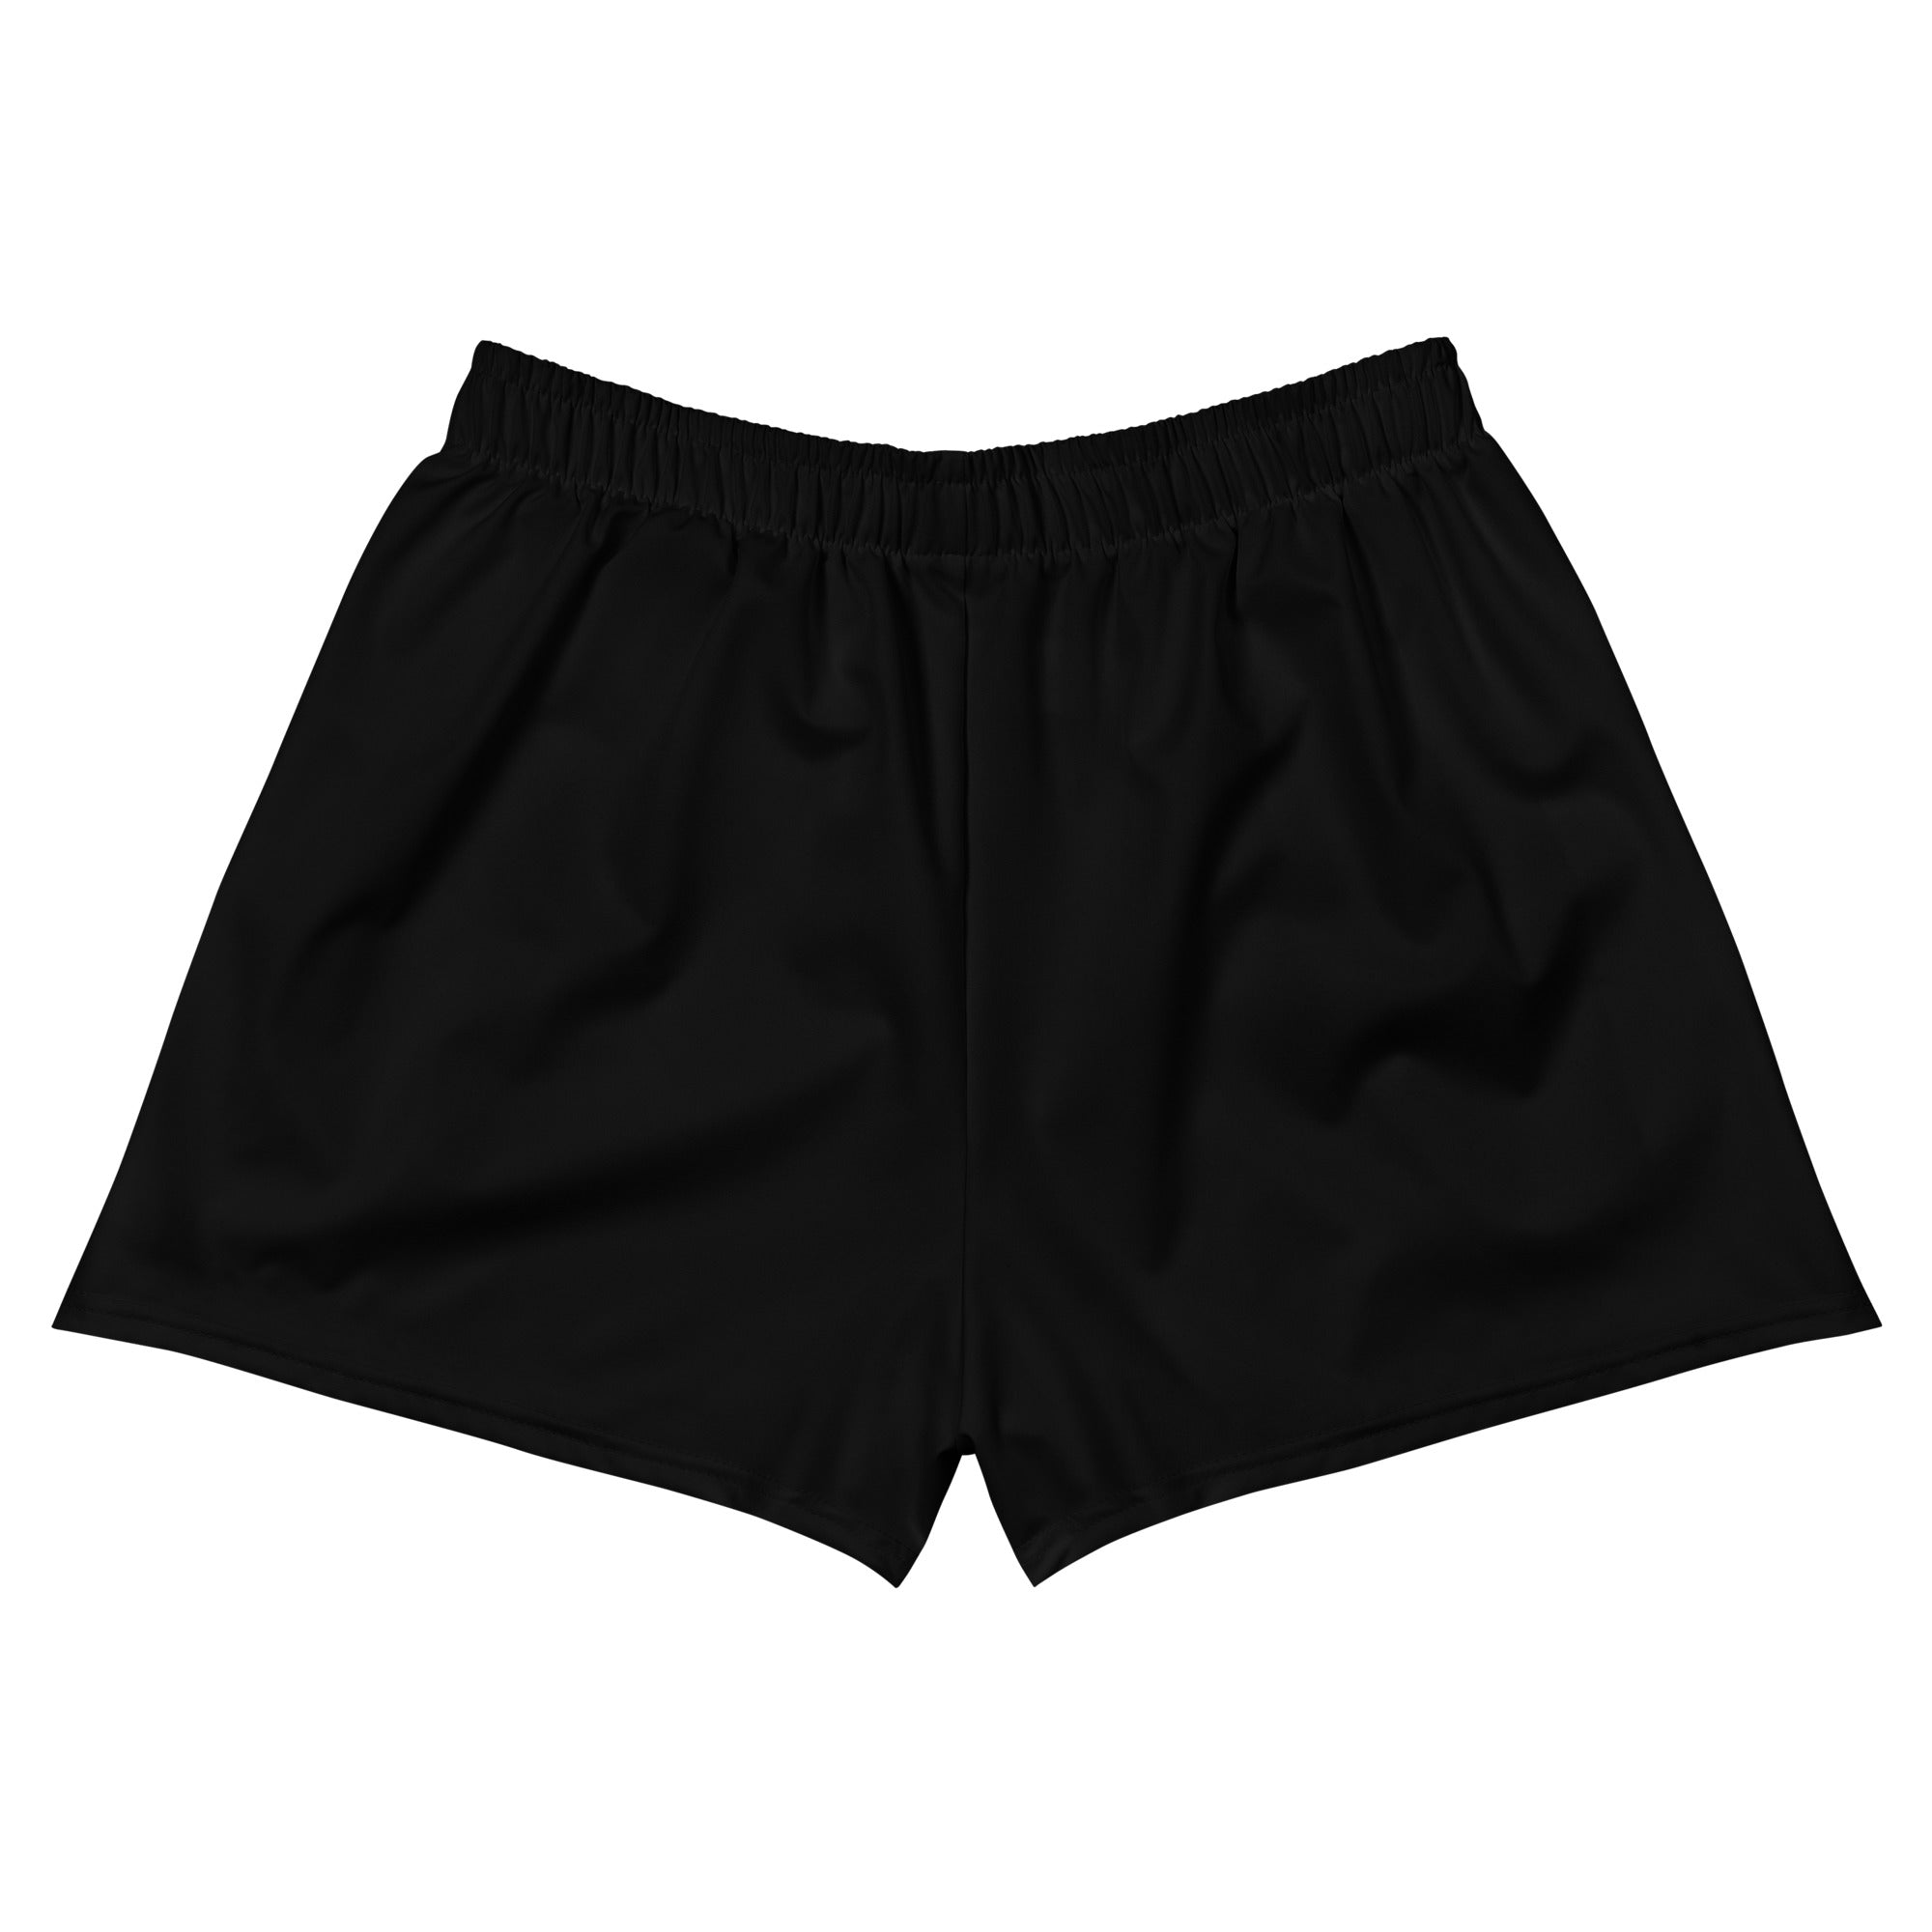 FoF Women's Athletic Short Shorts